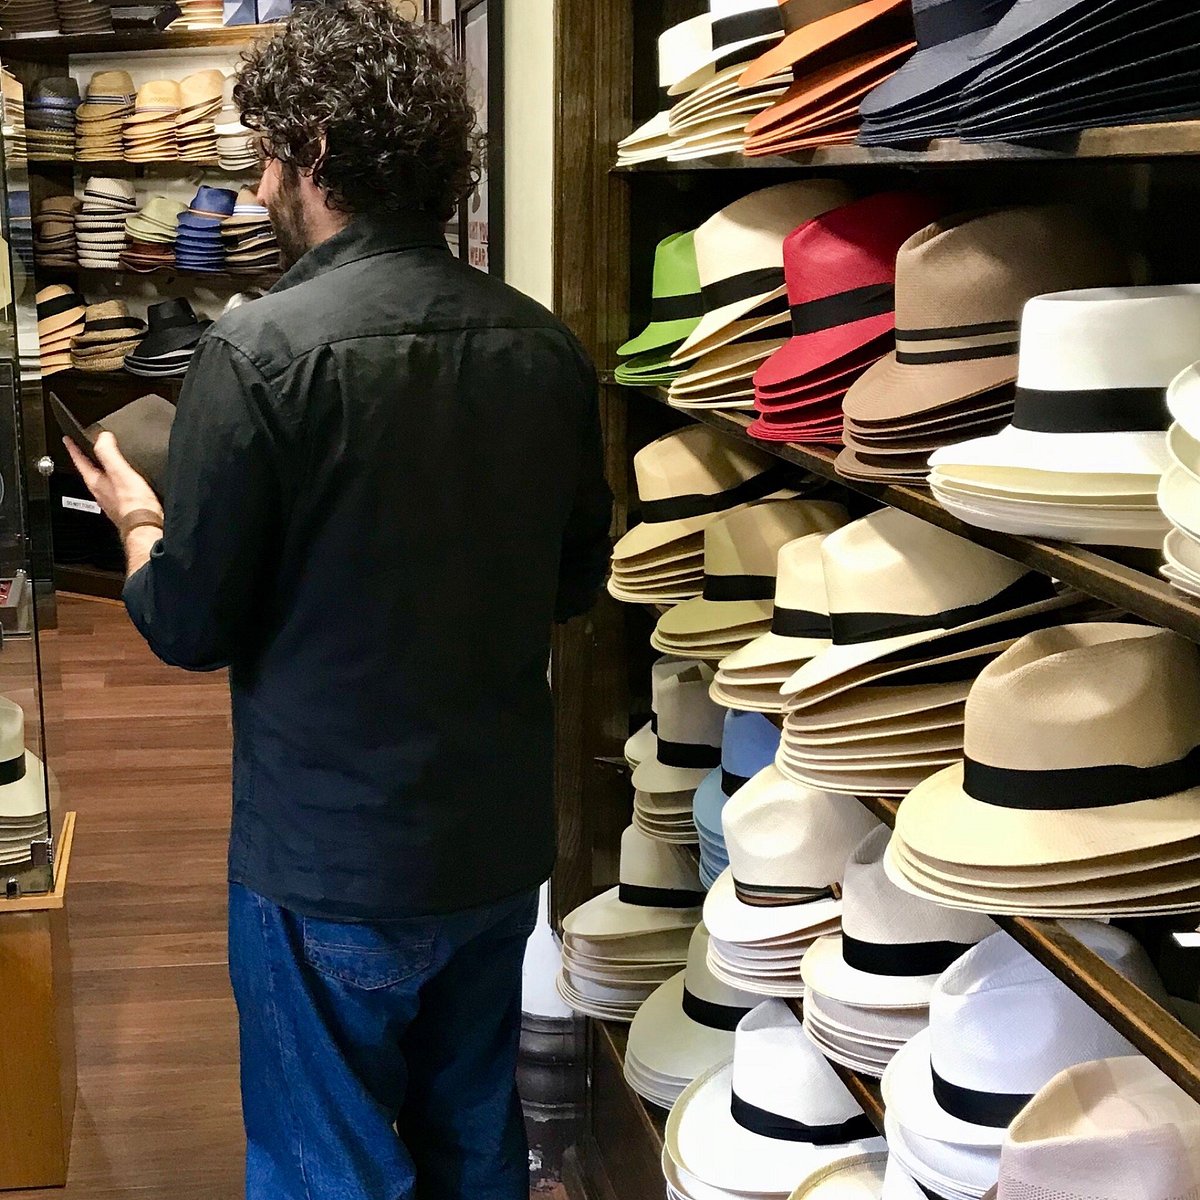 The 10 Best Wide Brim Hats at Historical Emporium